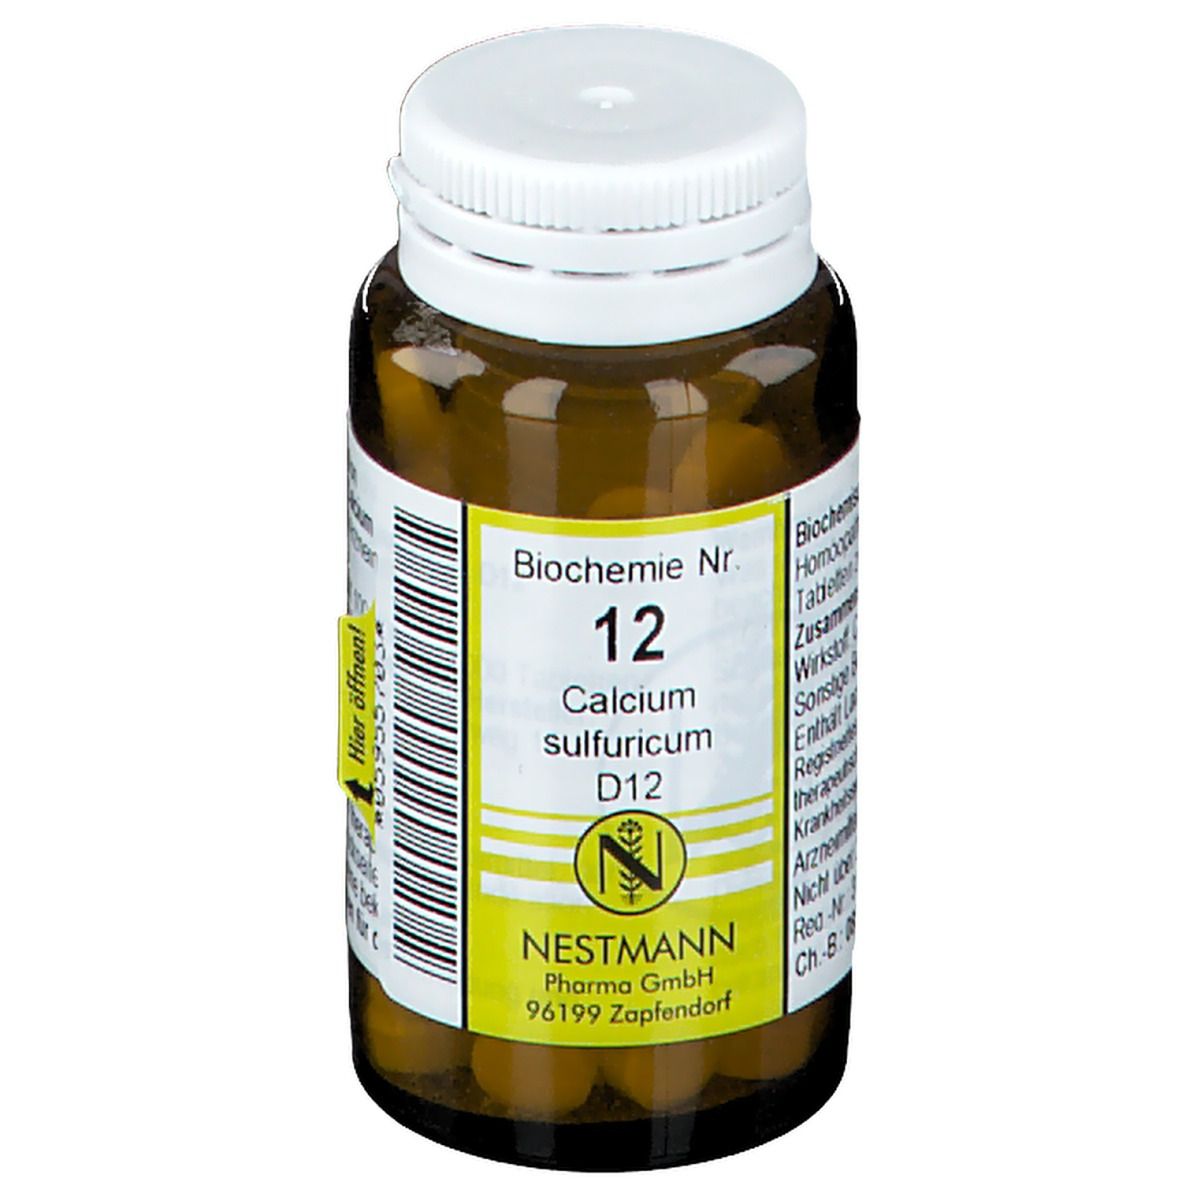 Nestmann Biochemie Nr. 12 Calcium sulfuricum D12